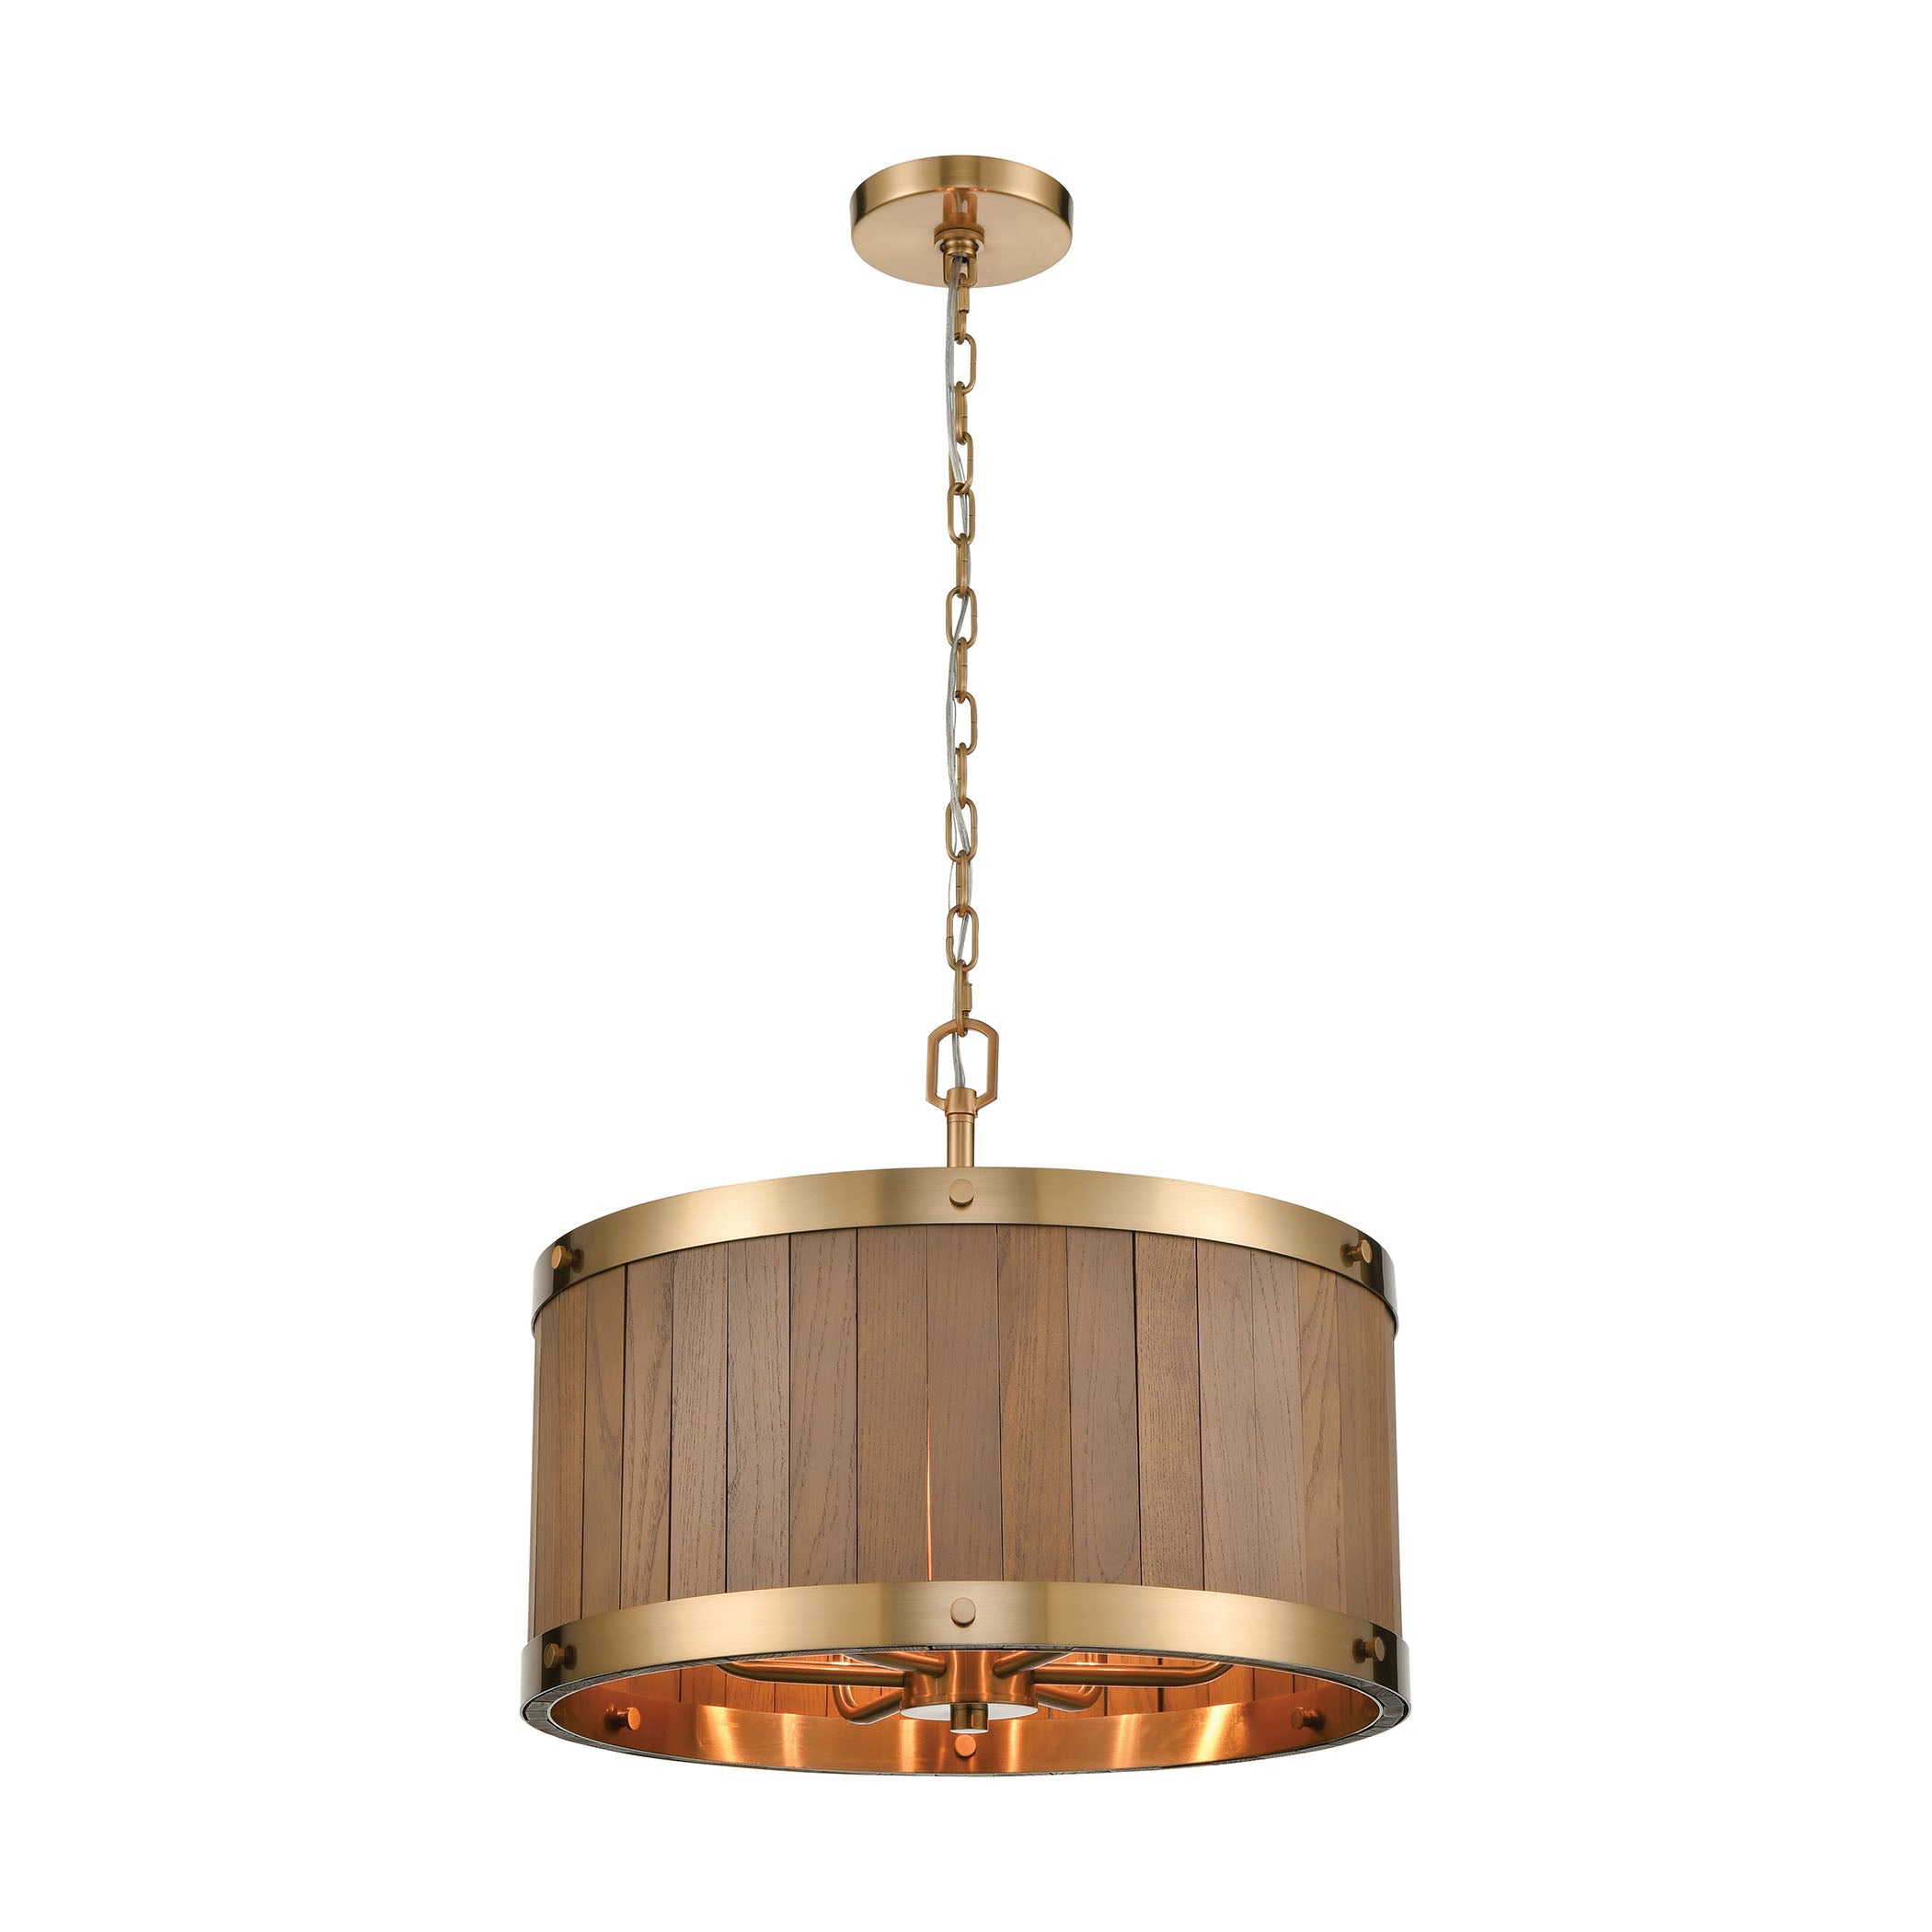 ELK Lighting 33374/6 Wooden Barrel 6-Light Chandelier in Satin Brass with Slatted Wood Shade in Medium Oak